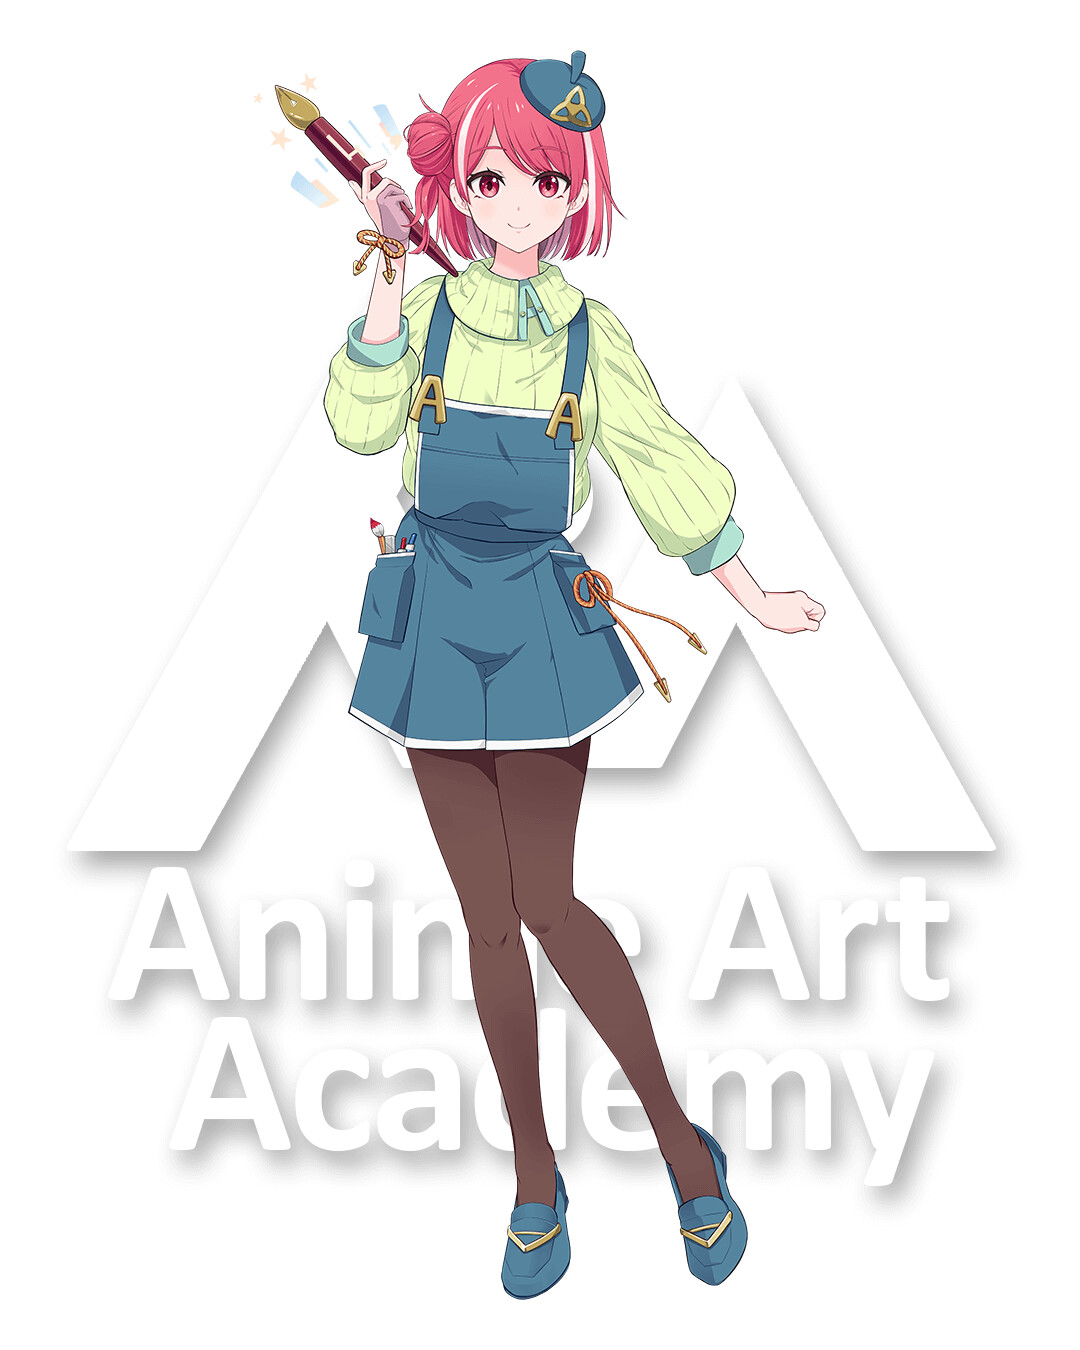 ArtStation - Anime Art Academy